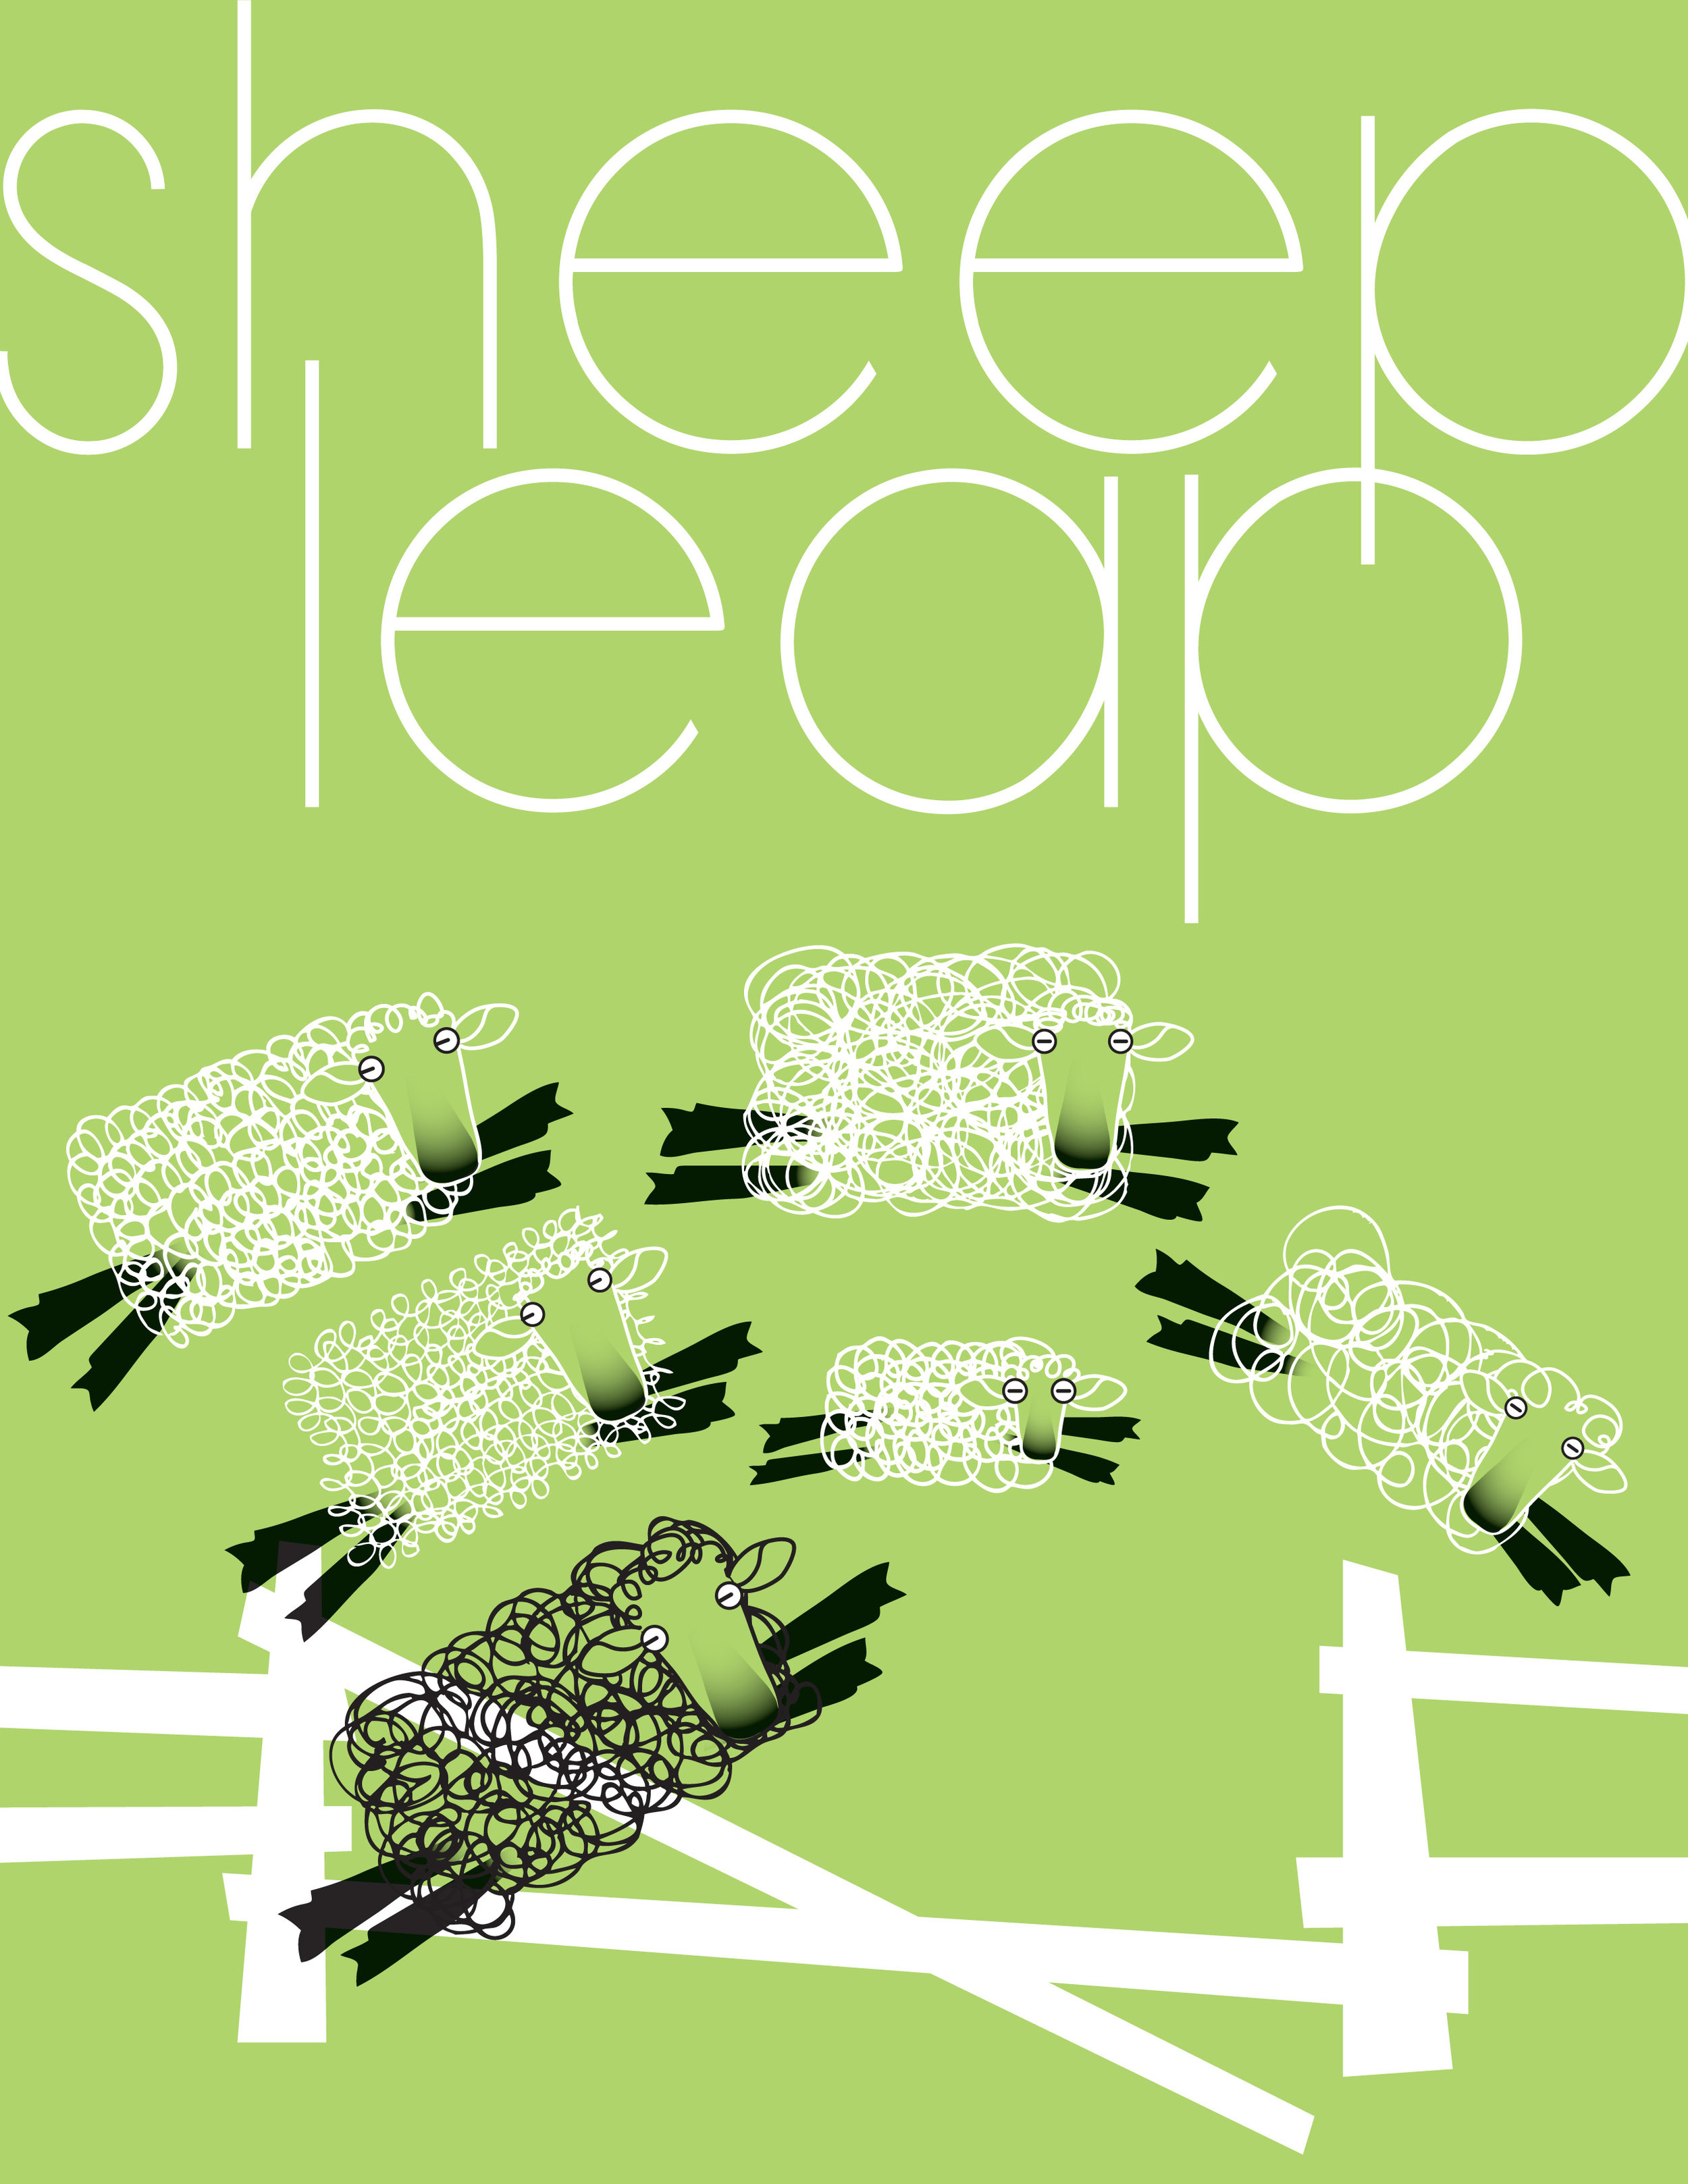 Sheep Sleep Book 2-5.jpg